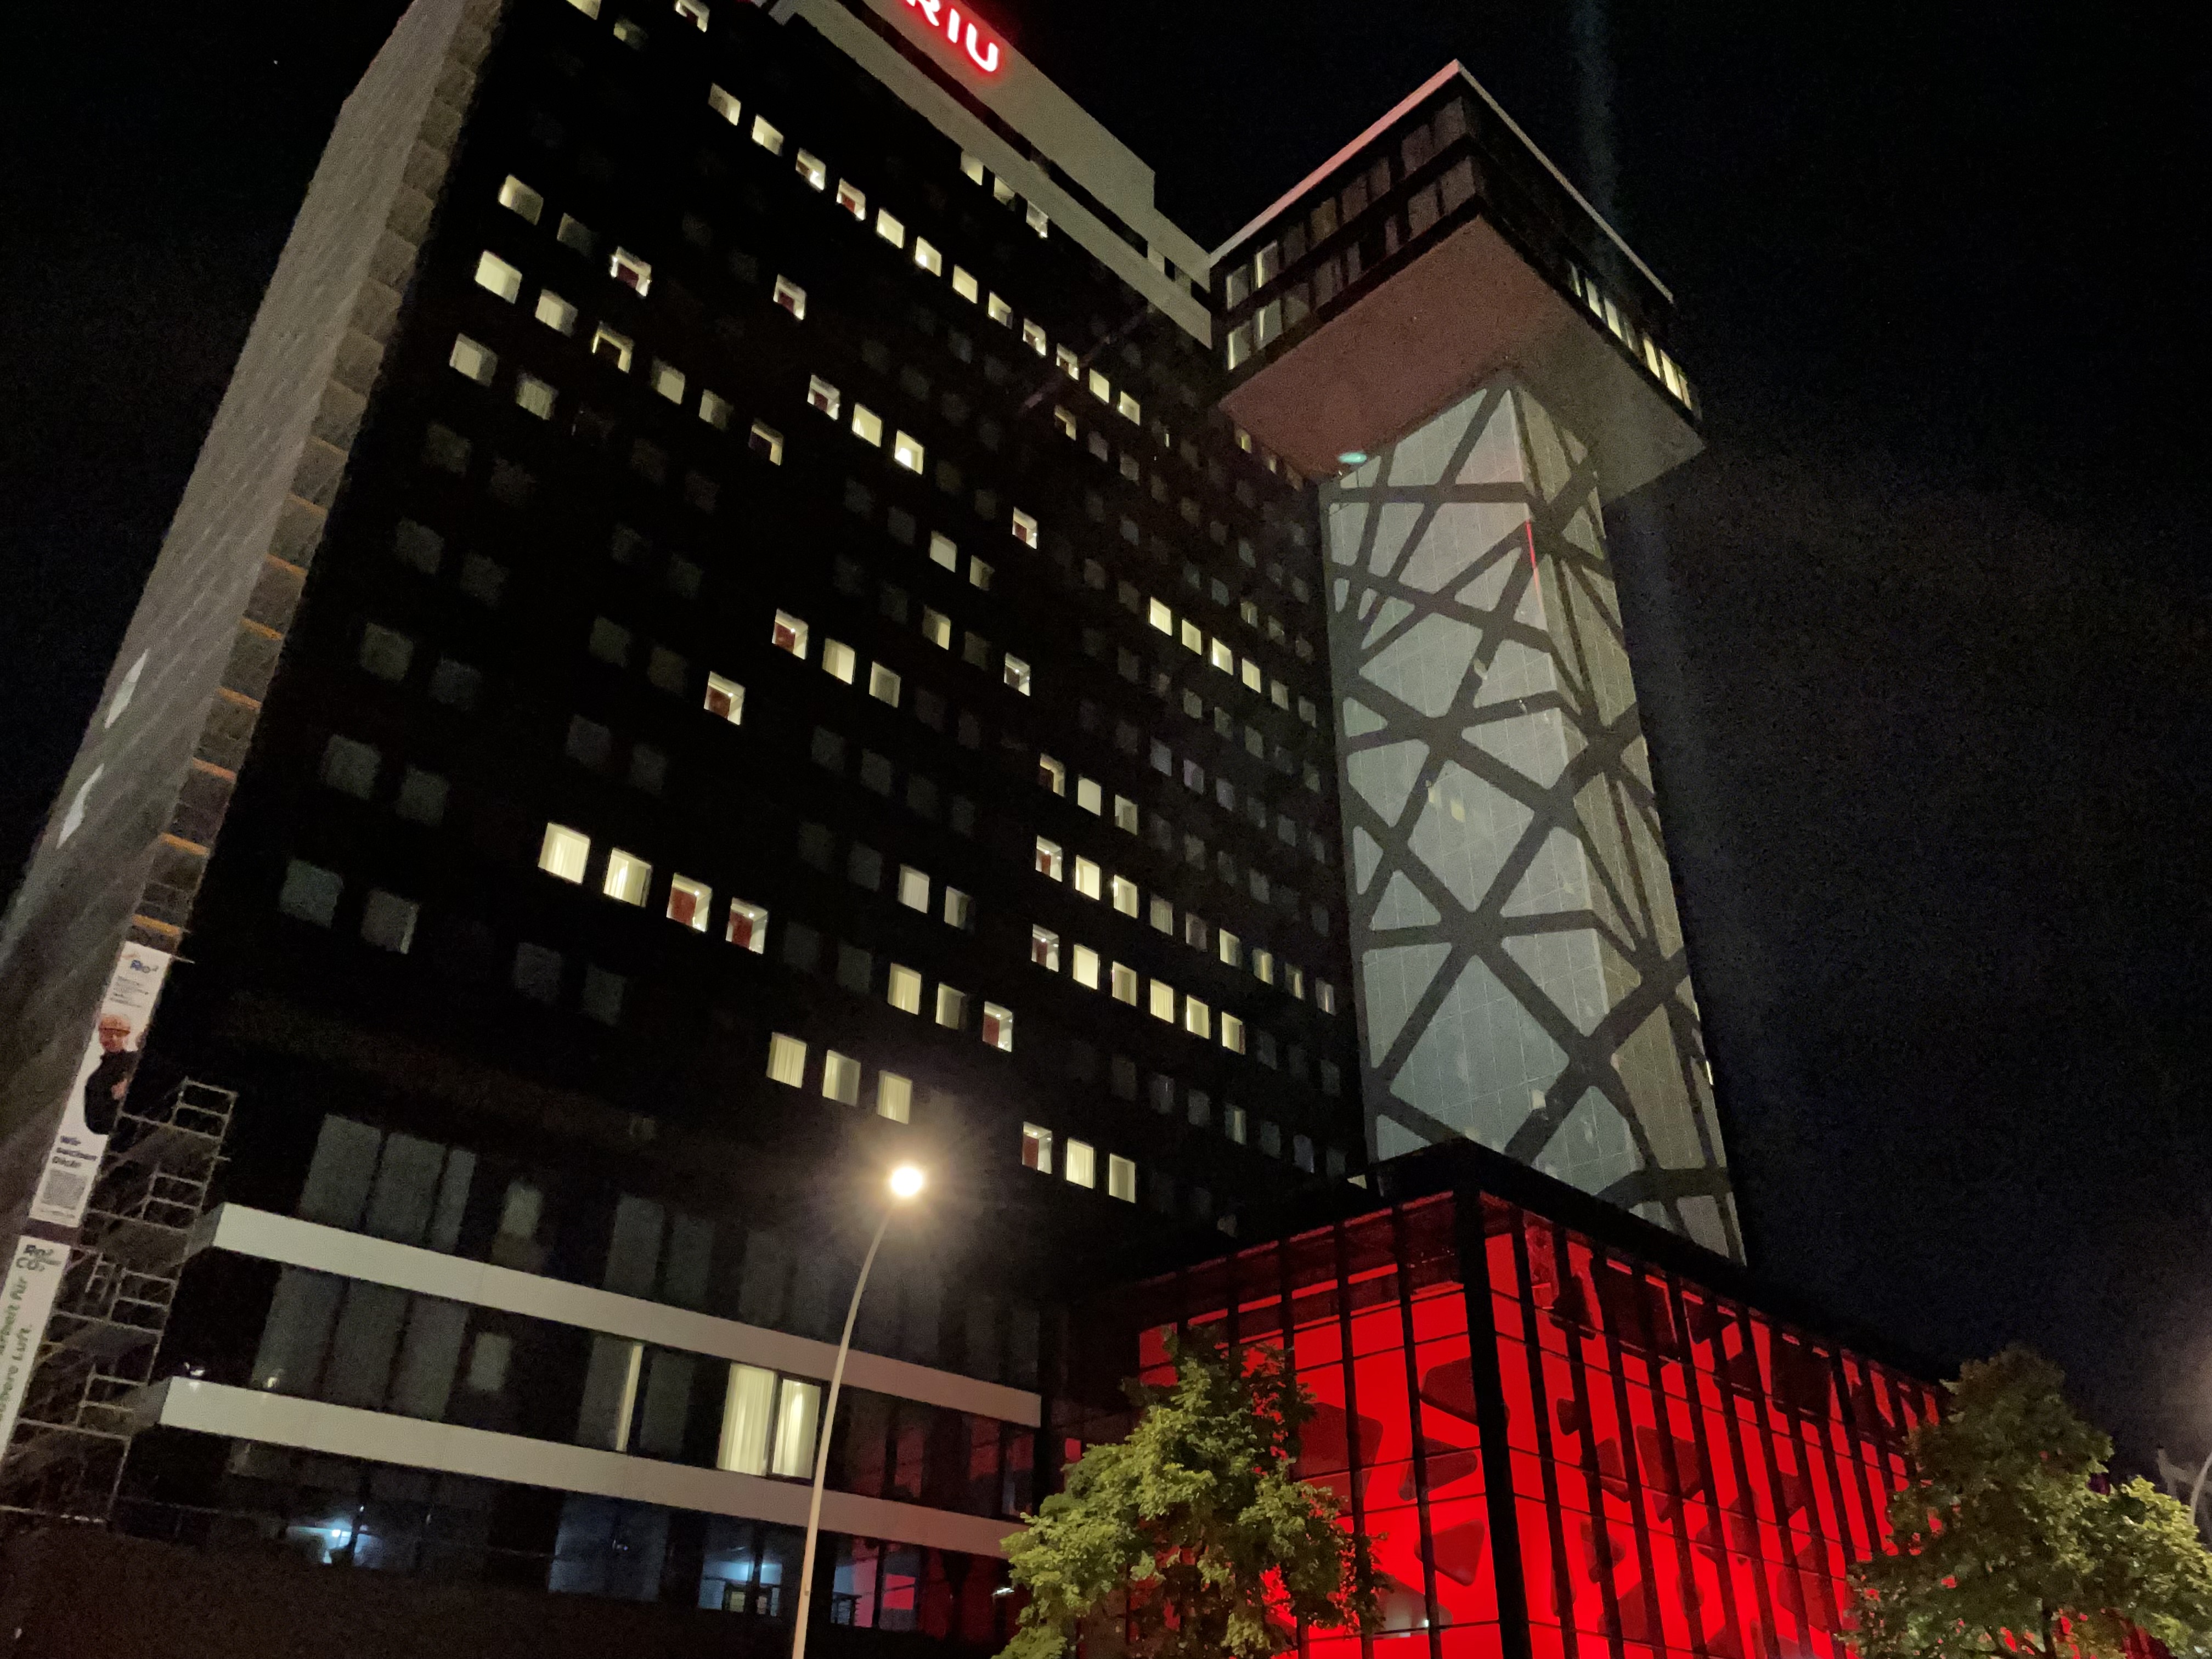 Hotel Riu Plaza Berlin bei Nacht.
